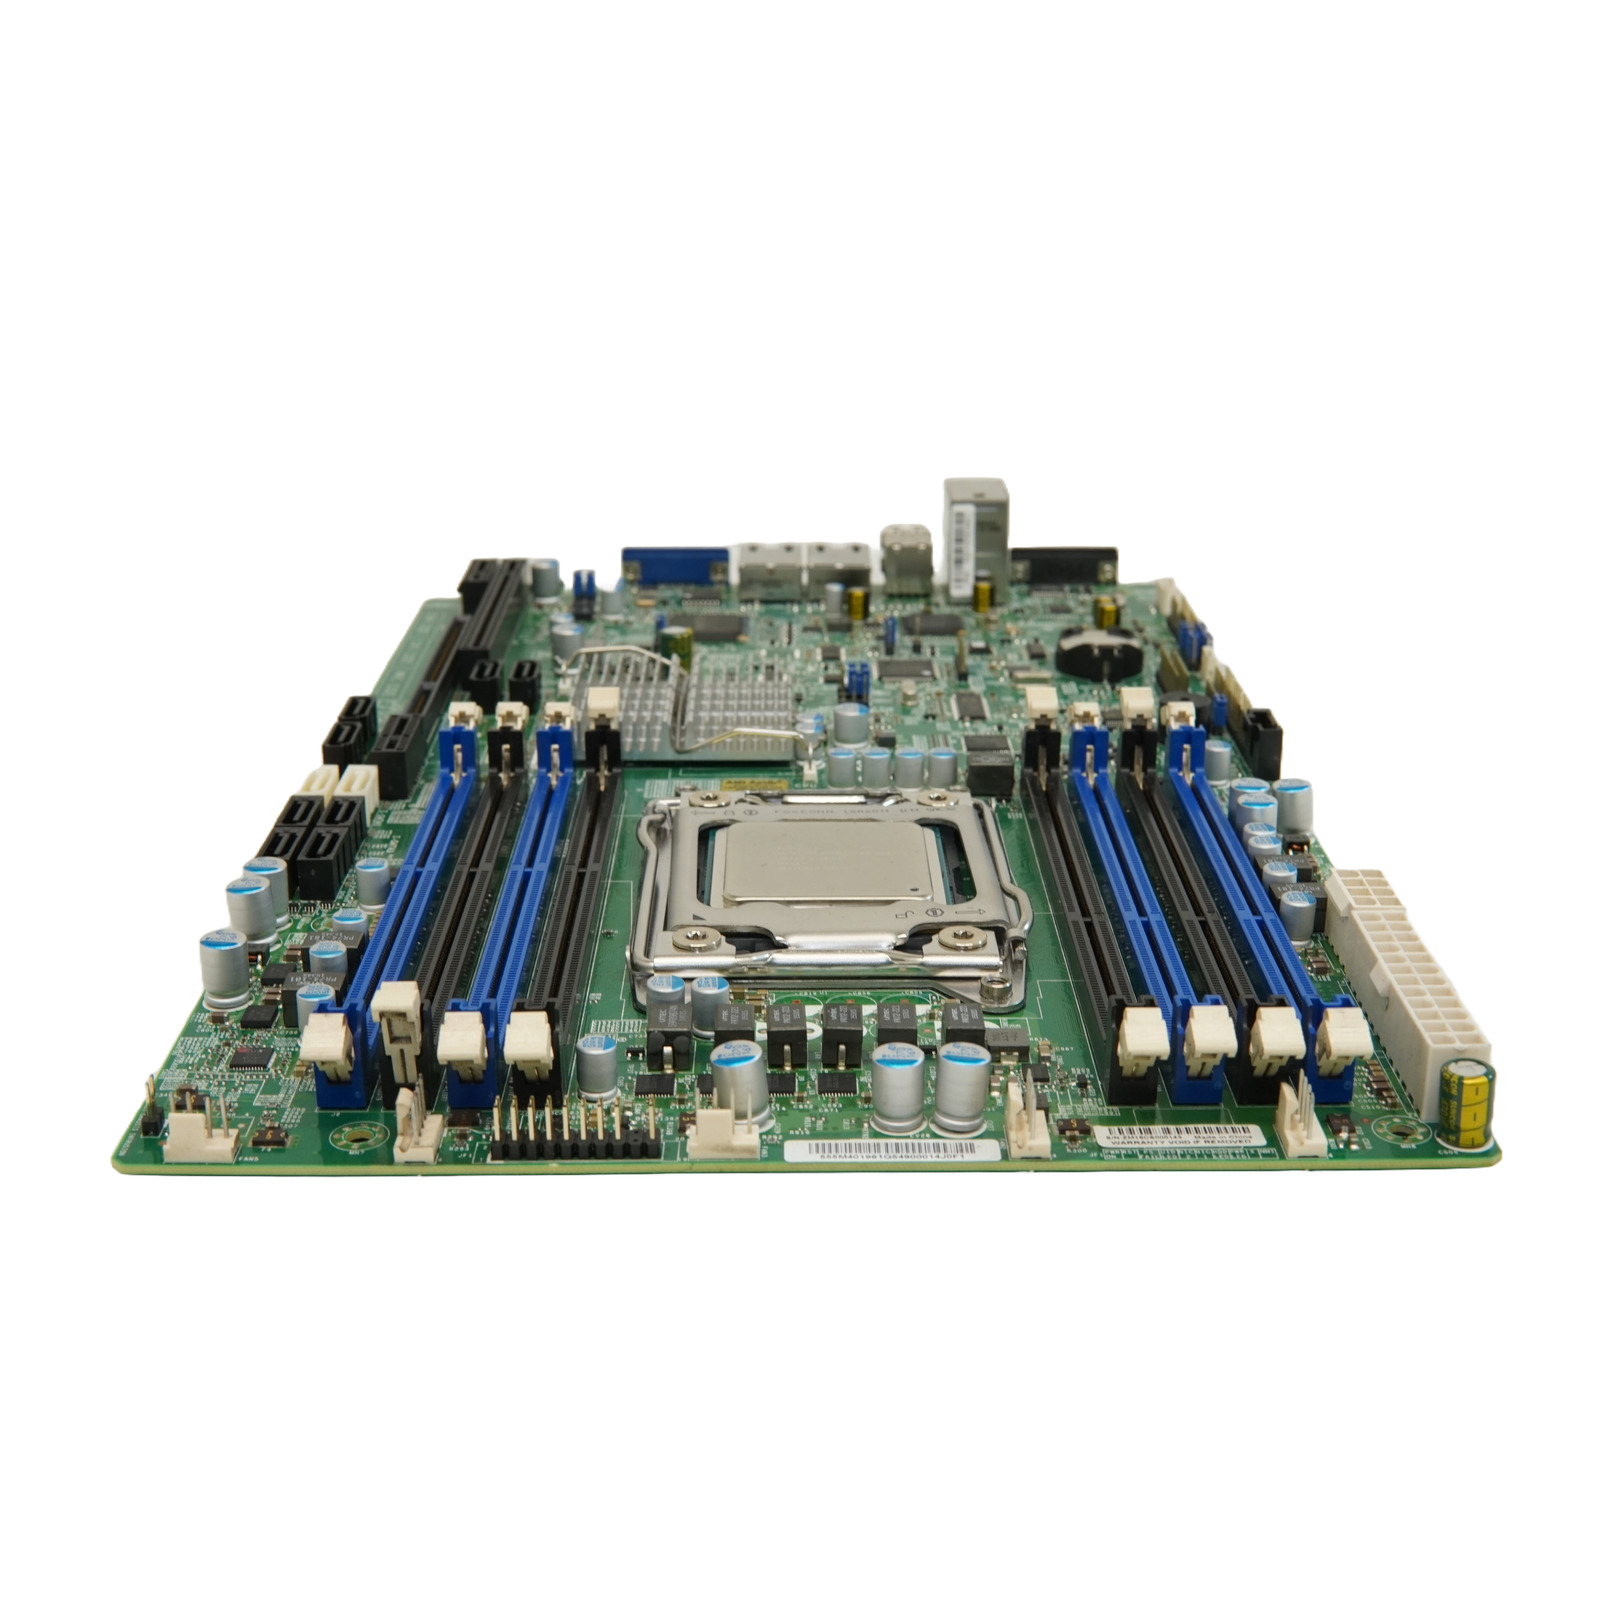 Supermicro X9SRW-F Server Motherboard w/Xeon E5-2609 @2.5GHz